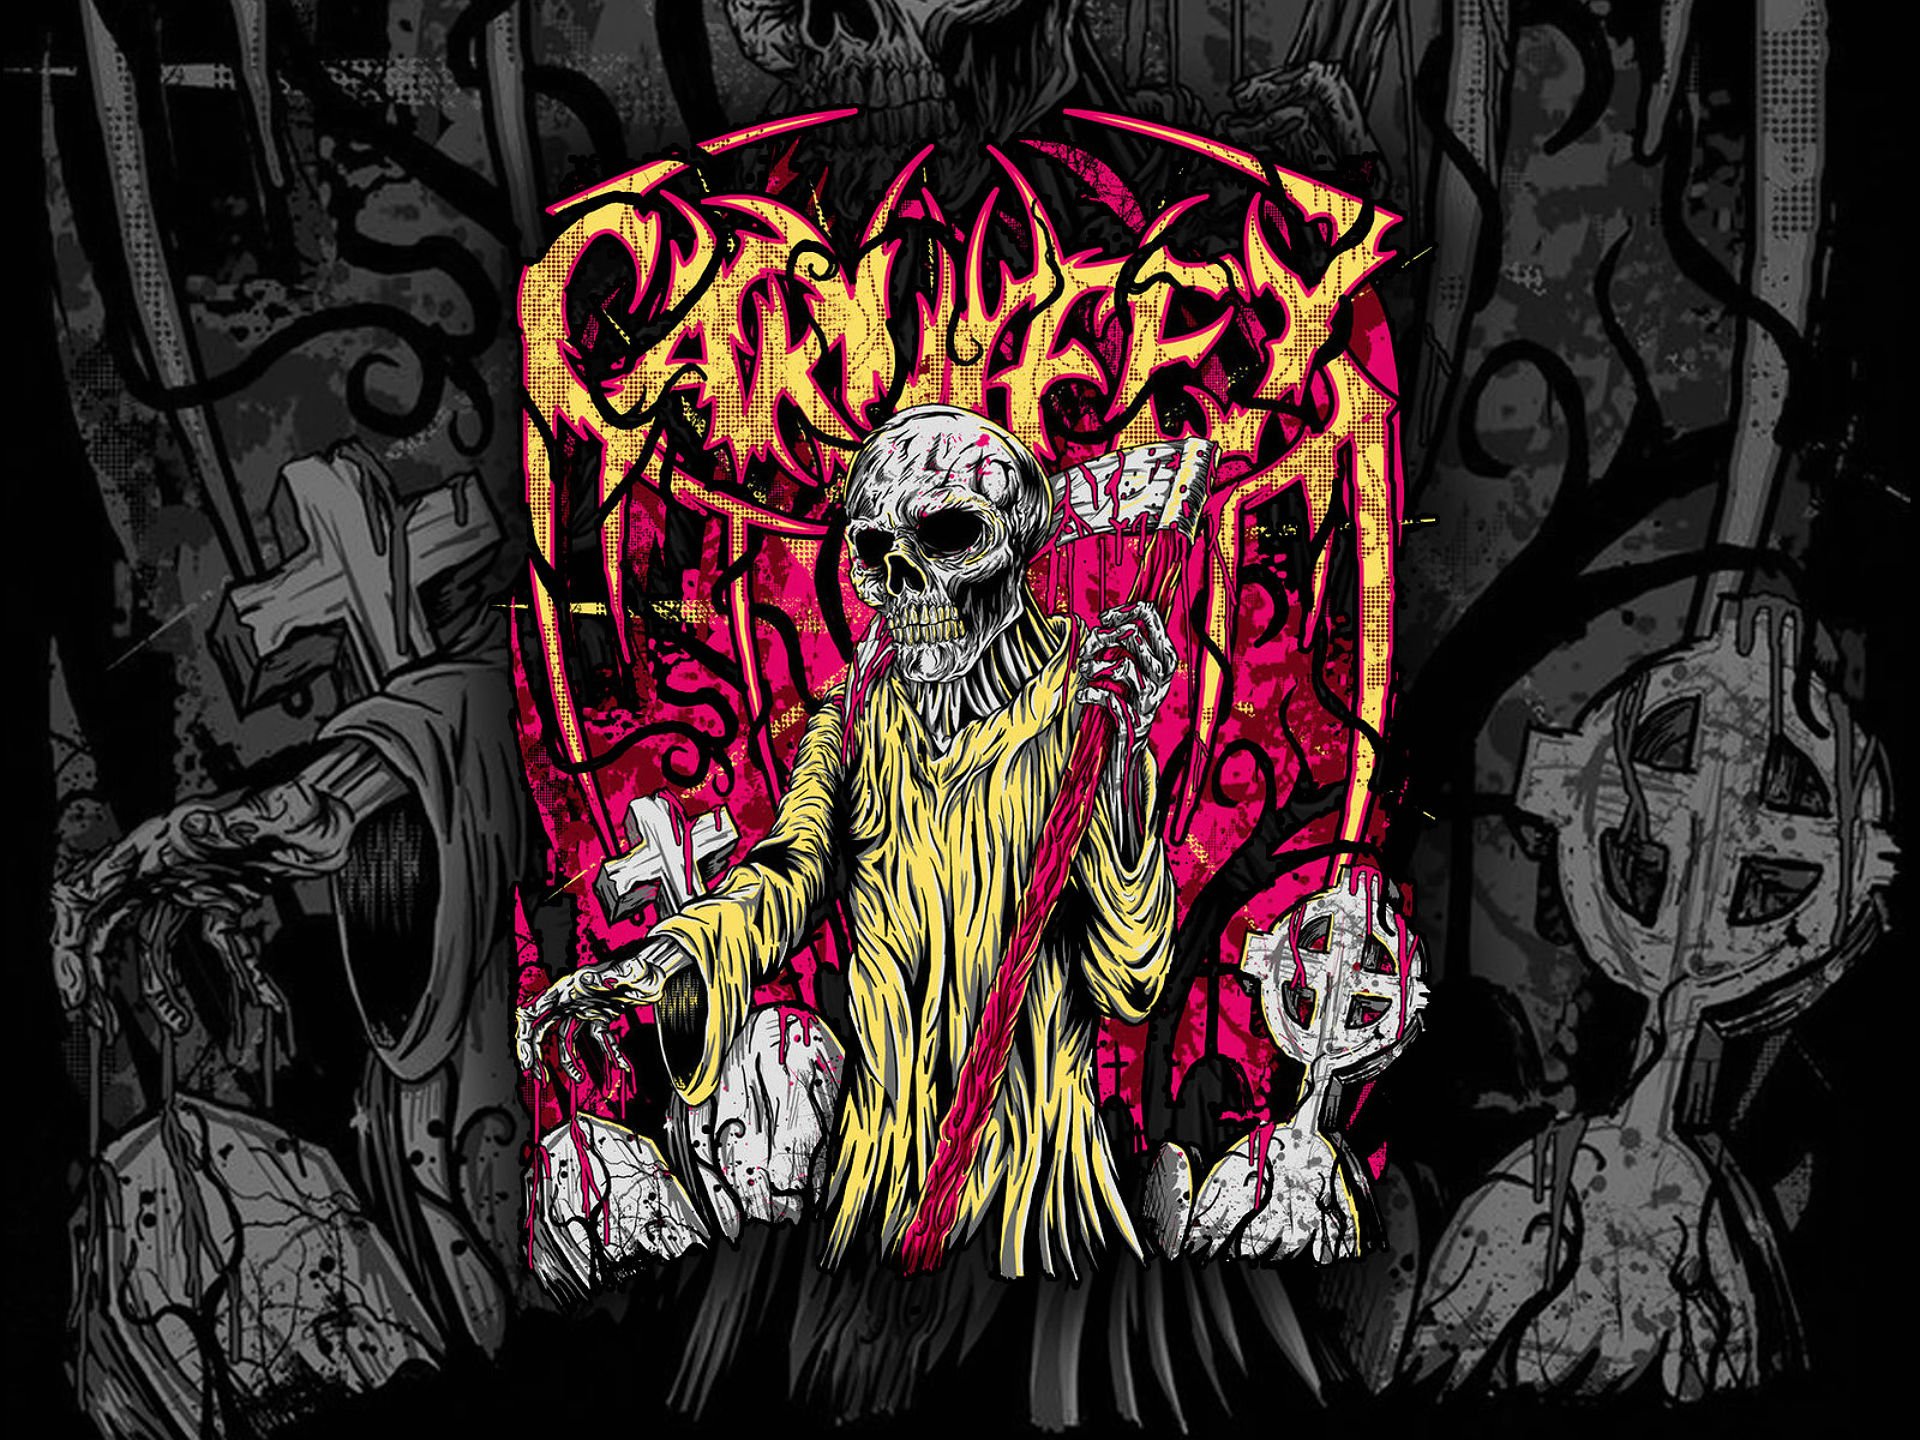 Carnifex Deathcore Heavy Metal 1carn Death Symphonic Dark